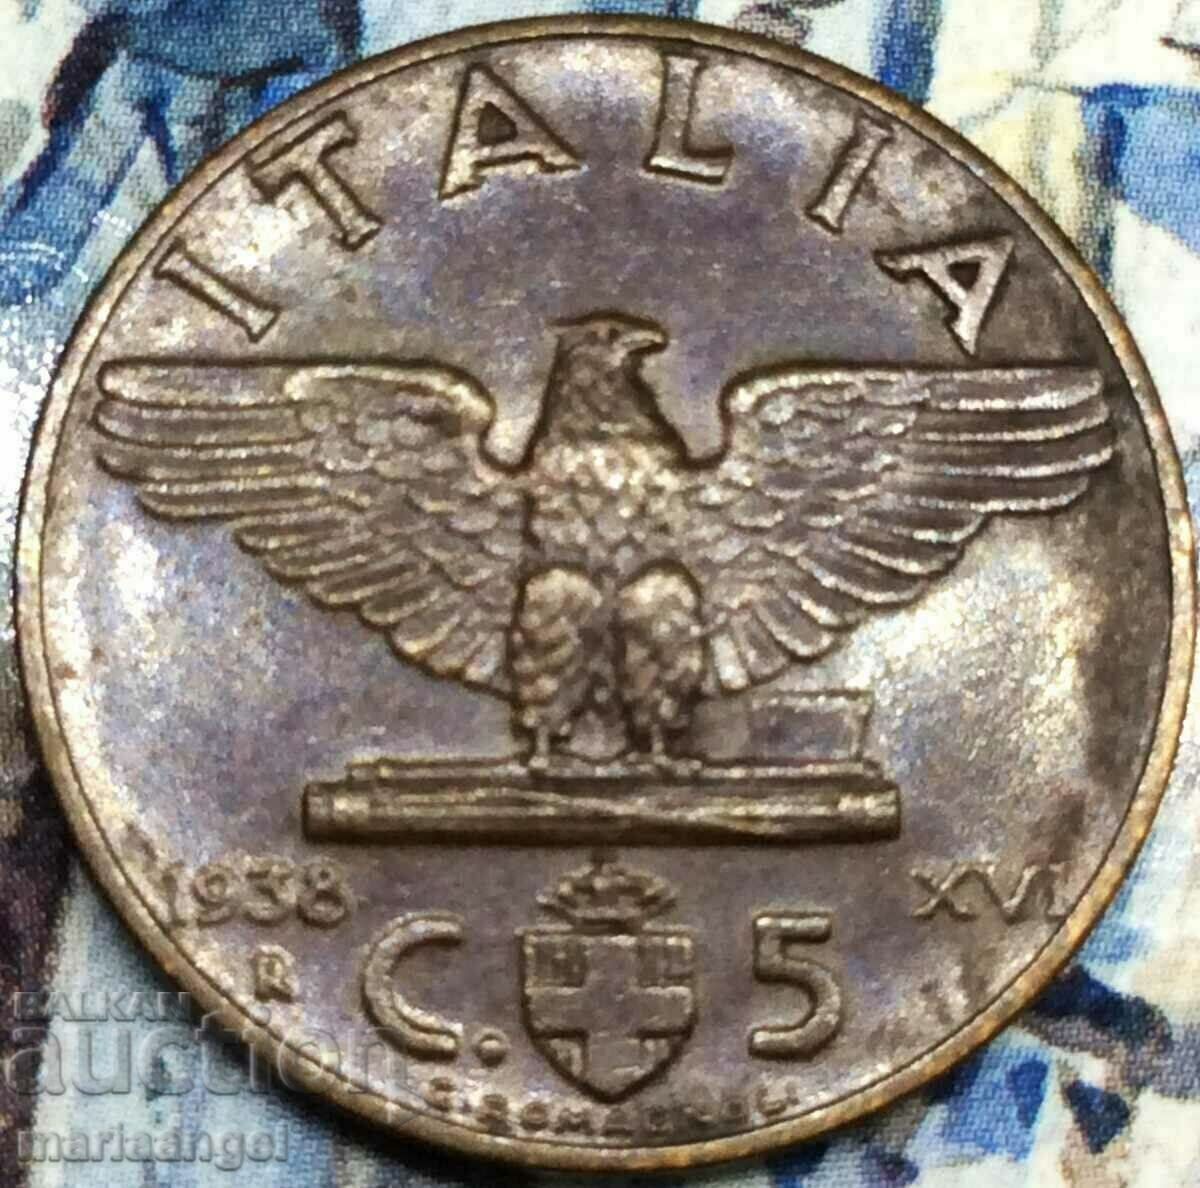 1938 5 centesimi Italy Eagle bronze